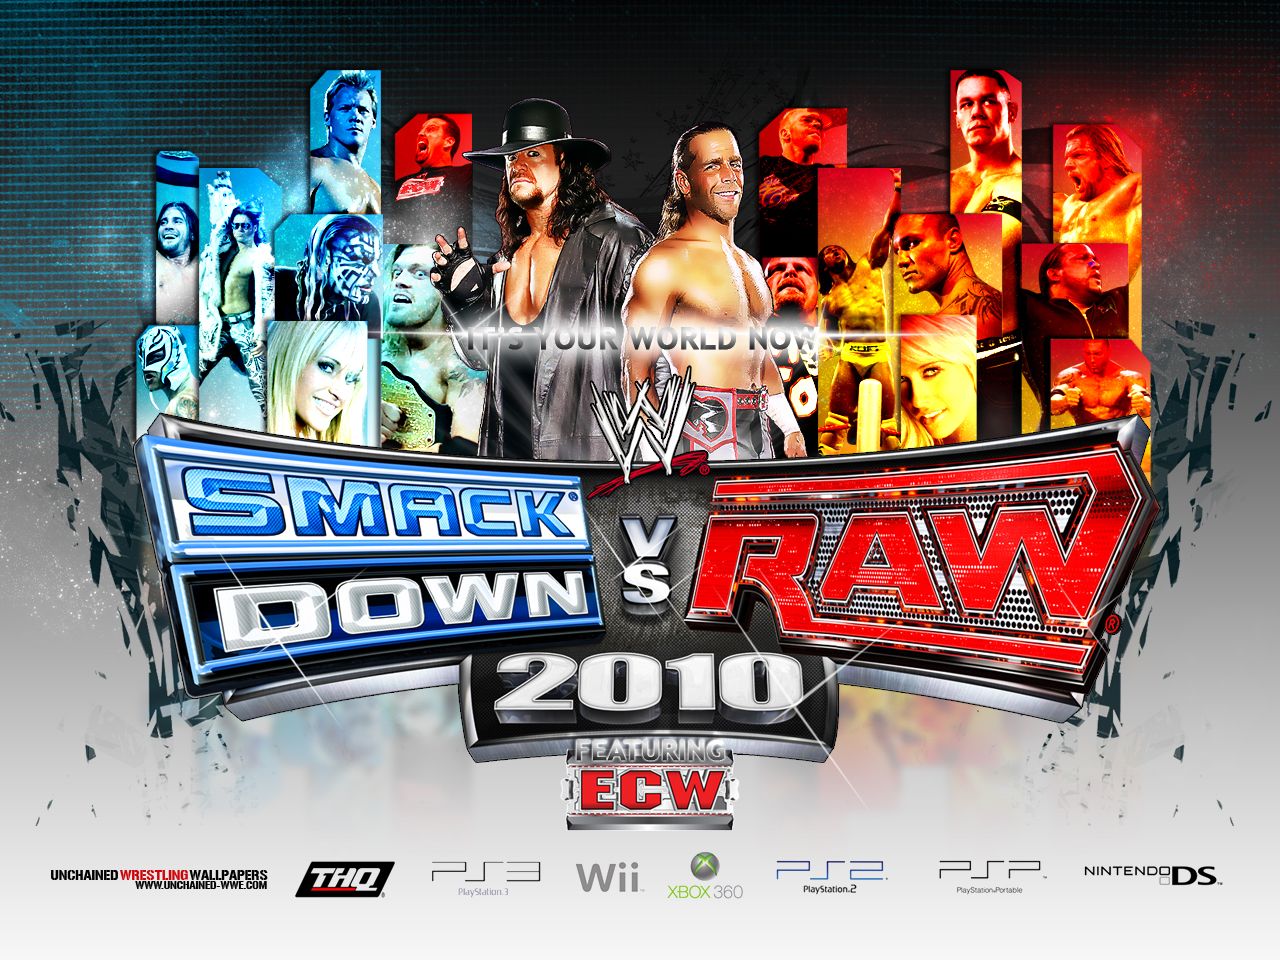 Wwe Smackdown Vs Raw 2007 Wallpaper. WWE SmackDown! Vs Raw 2010 Wallpaper Unchained WWE.com WWE. Pc Games Download, Game Download Free, Download Games